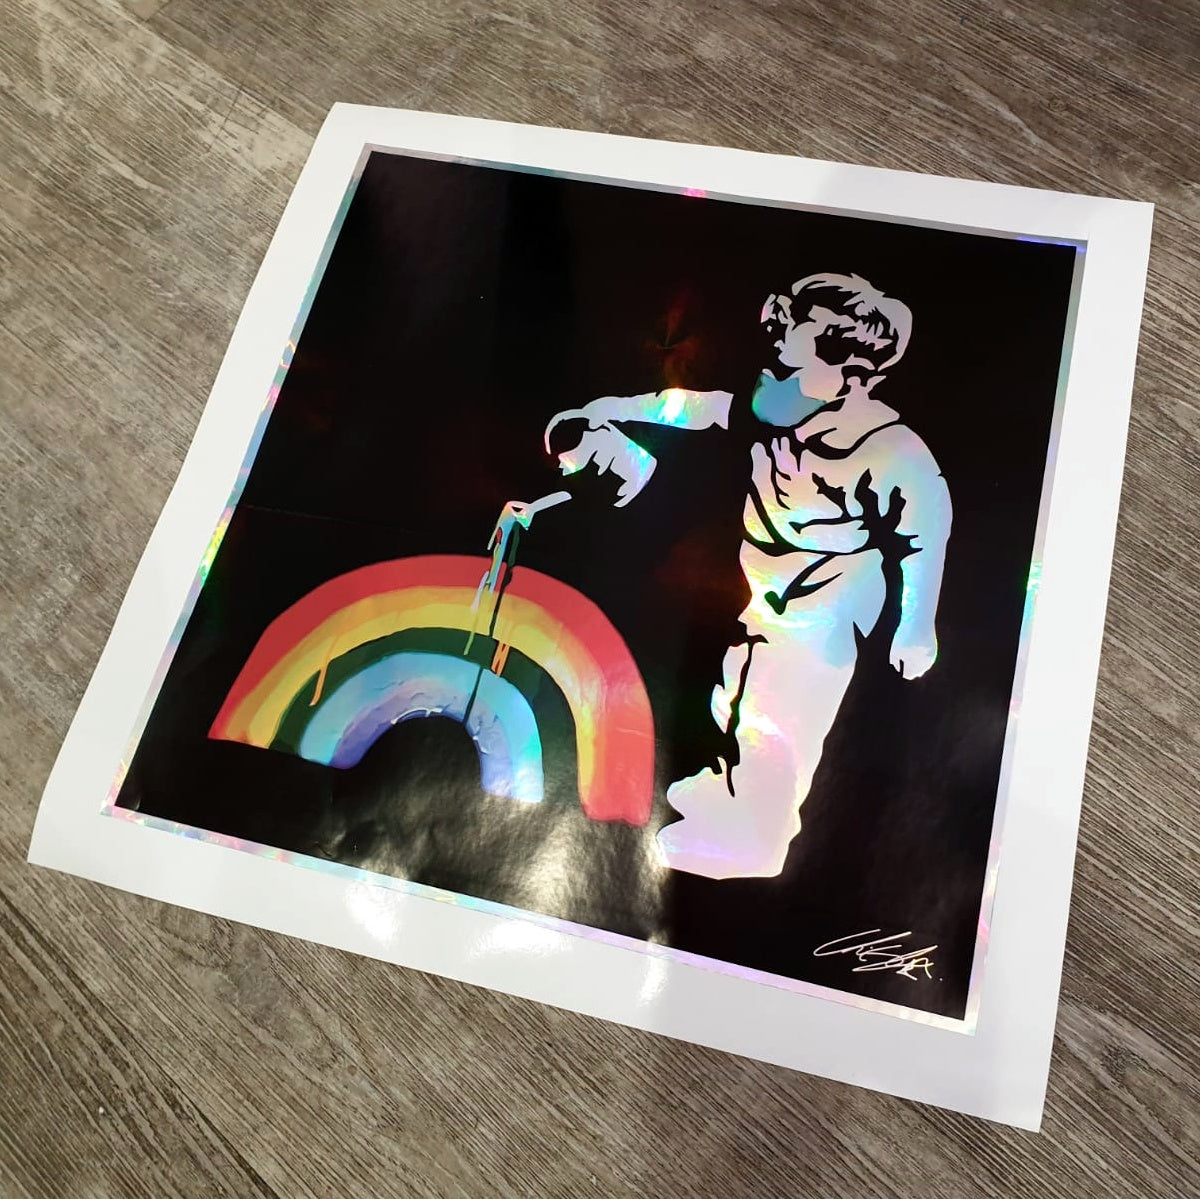 Number 1 of 25 Metallic Holographic "Rainbow" 'Rainbow Boy' Hand Signed 25 Unit Limited Edition Print Run (40cm sq.)